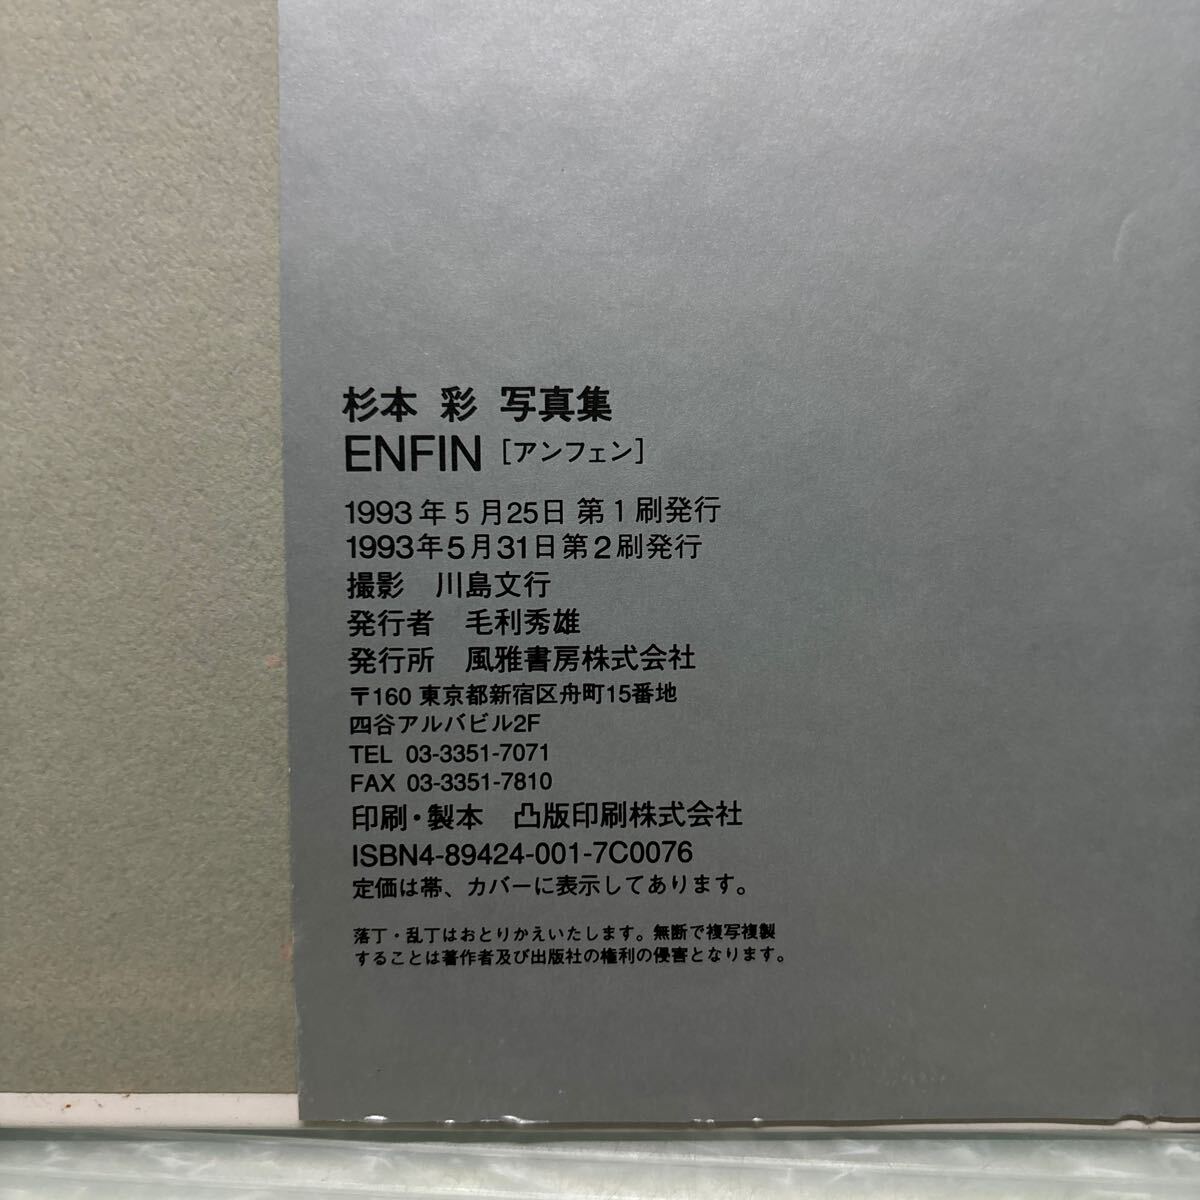 [ large size photoalbum ]S0520 Sugimoto Aya photoalbum ENFIN